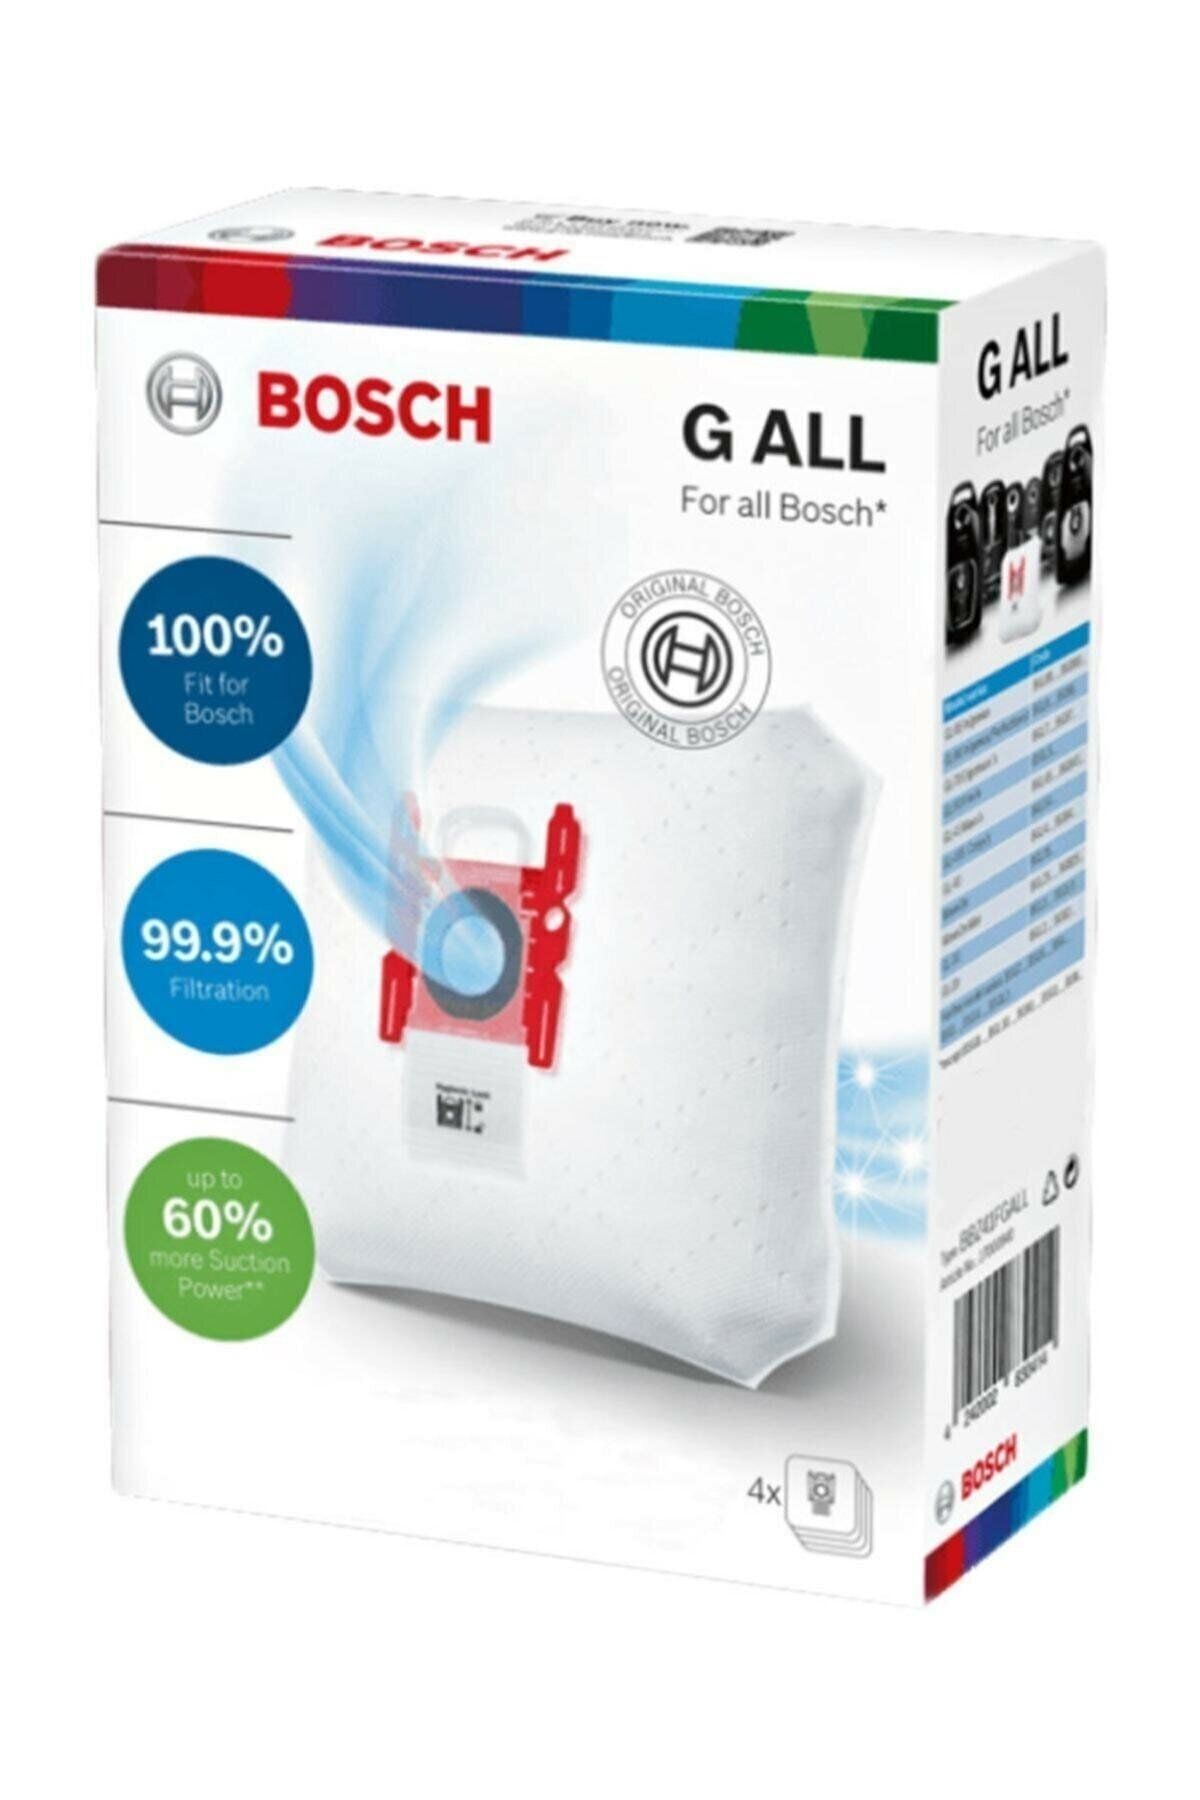 Bosch Bosh Bgl8sıl59 Süpürge G All Toz Torbası 4 Adet